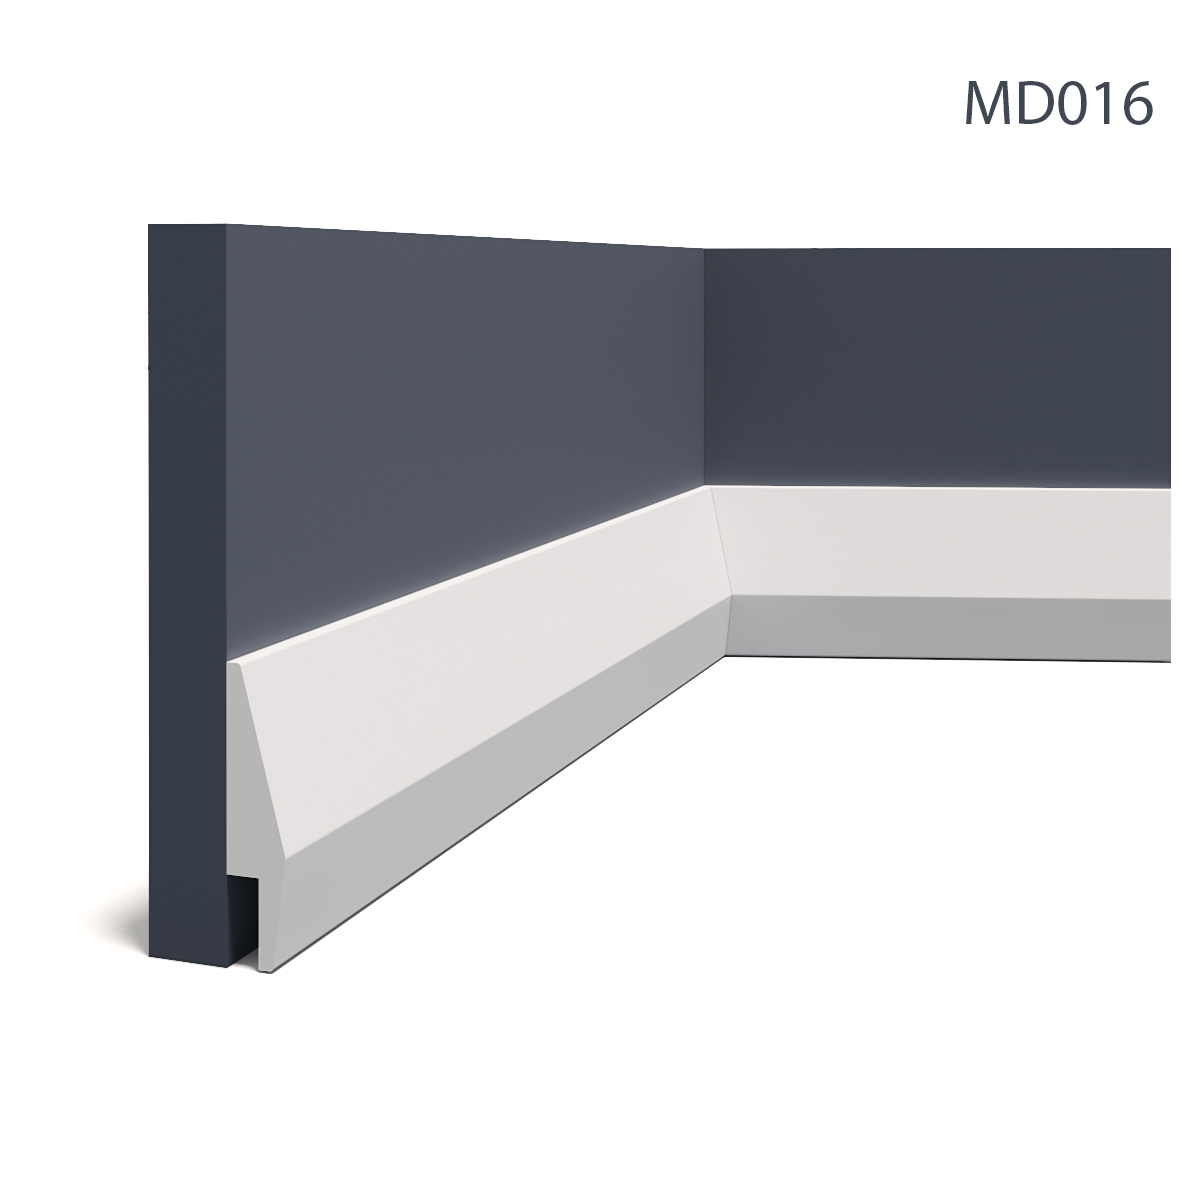 Plinte decorative Mardom Decor MRD-MD016P, material: PolyForce, SupremeSatin